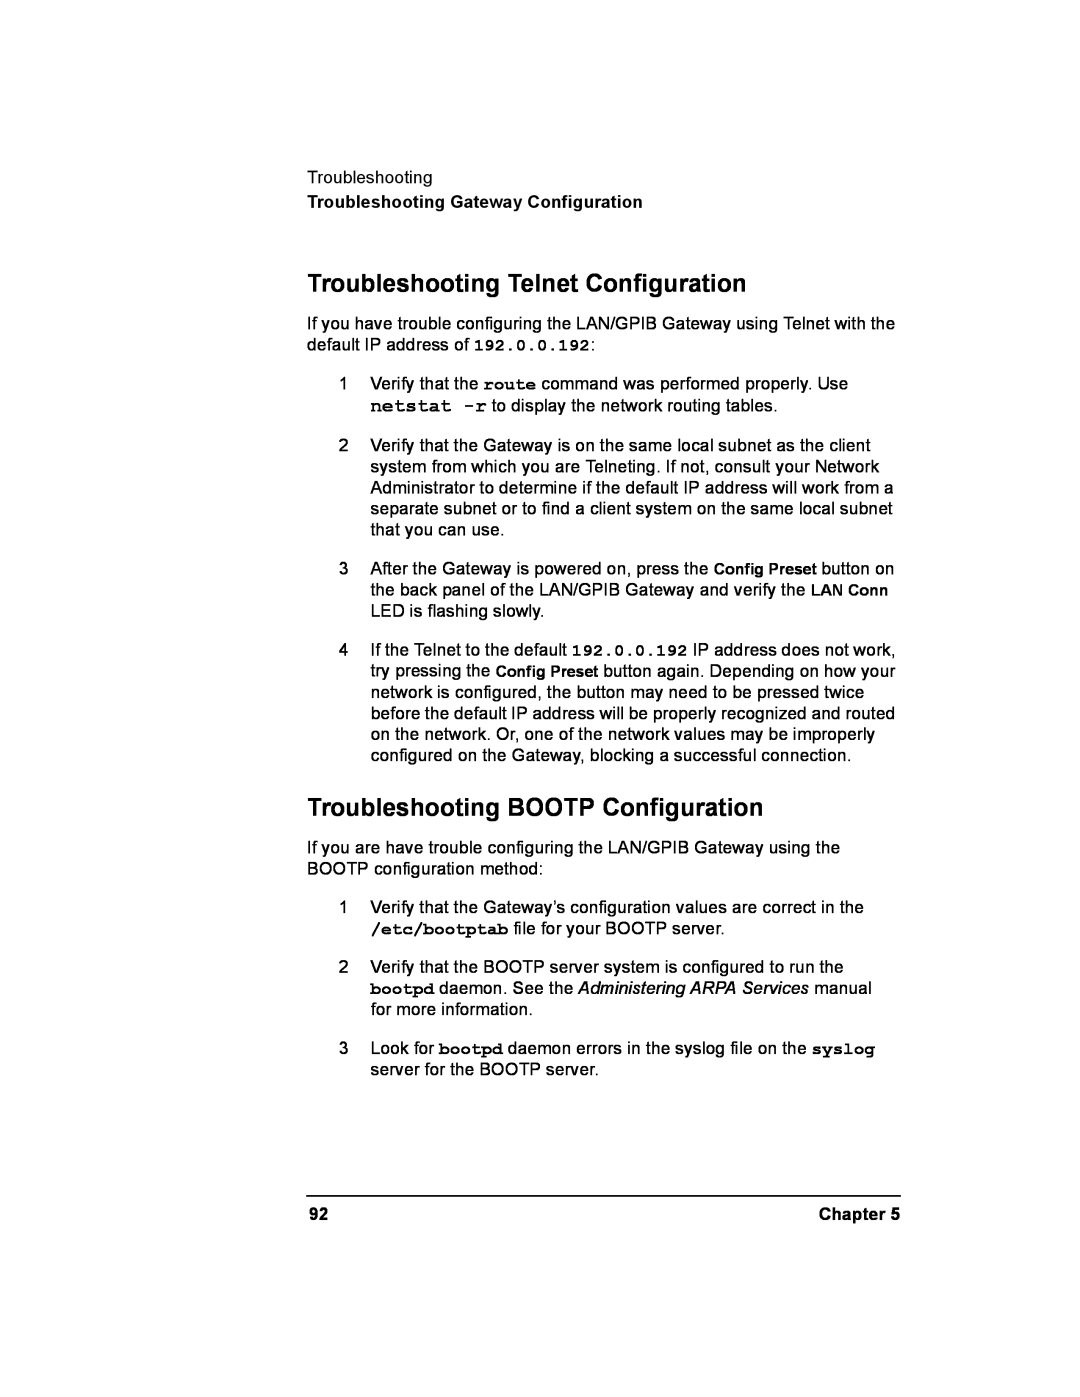 Agilent Technologies E2050-90003 manual Troubleshooting Telnet Configuration, Troubleshooting BOOTP Configuration, Chapter 